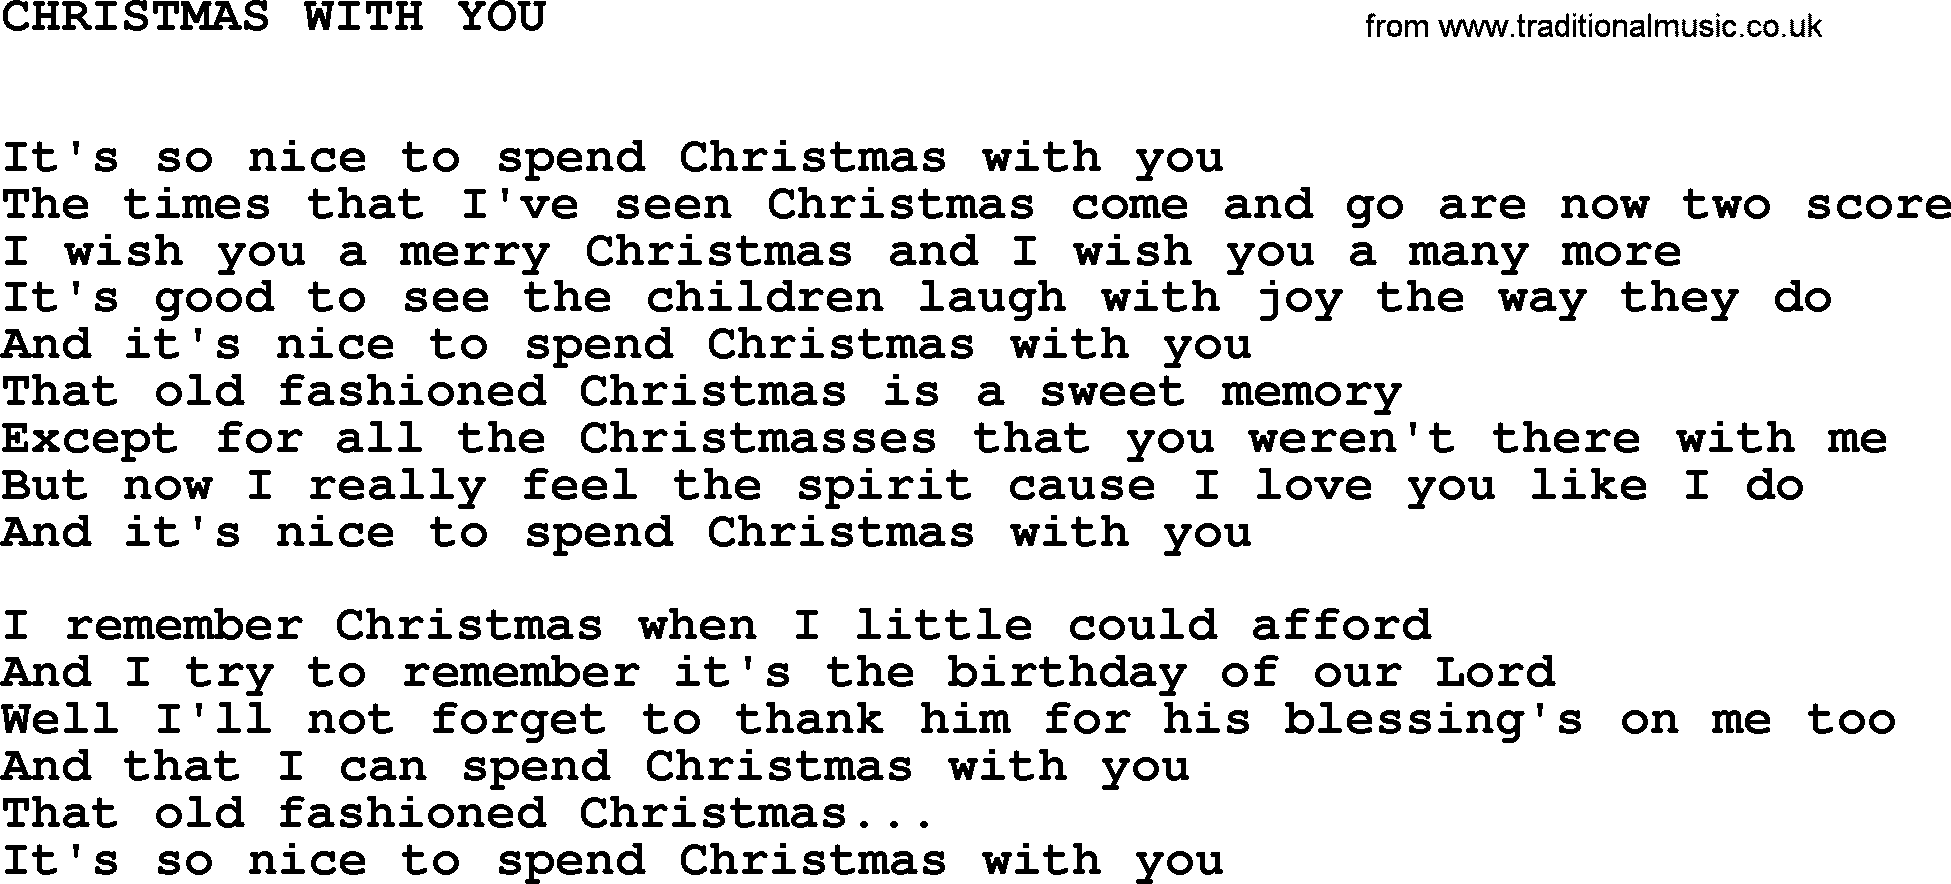 Johnny Cash song Christmas With You.txt lyrics